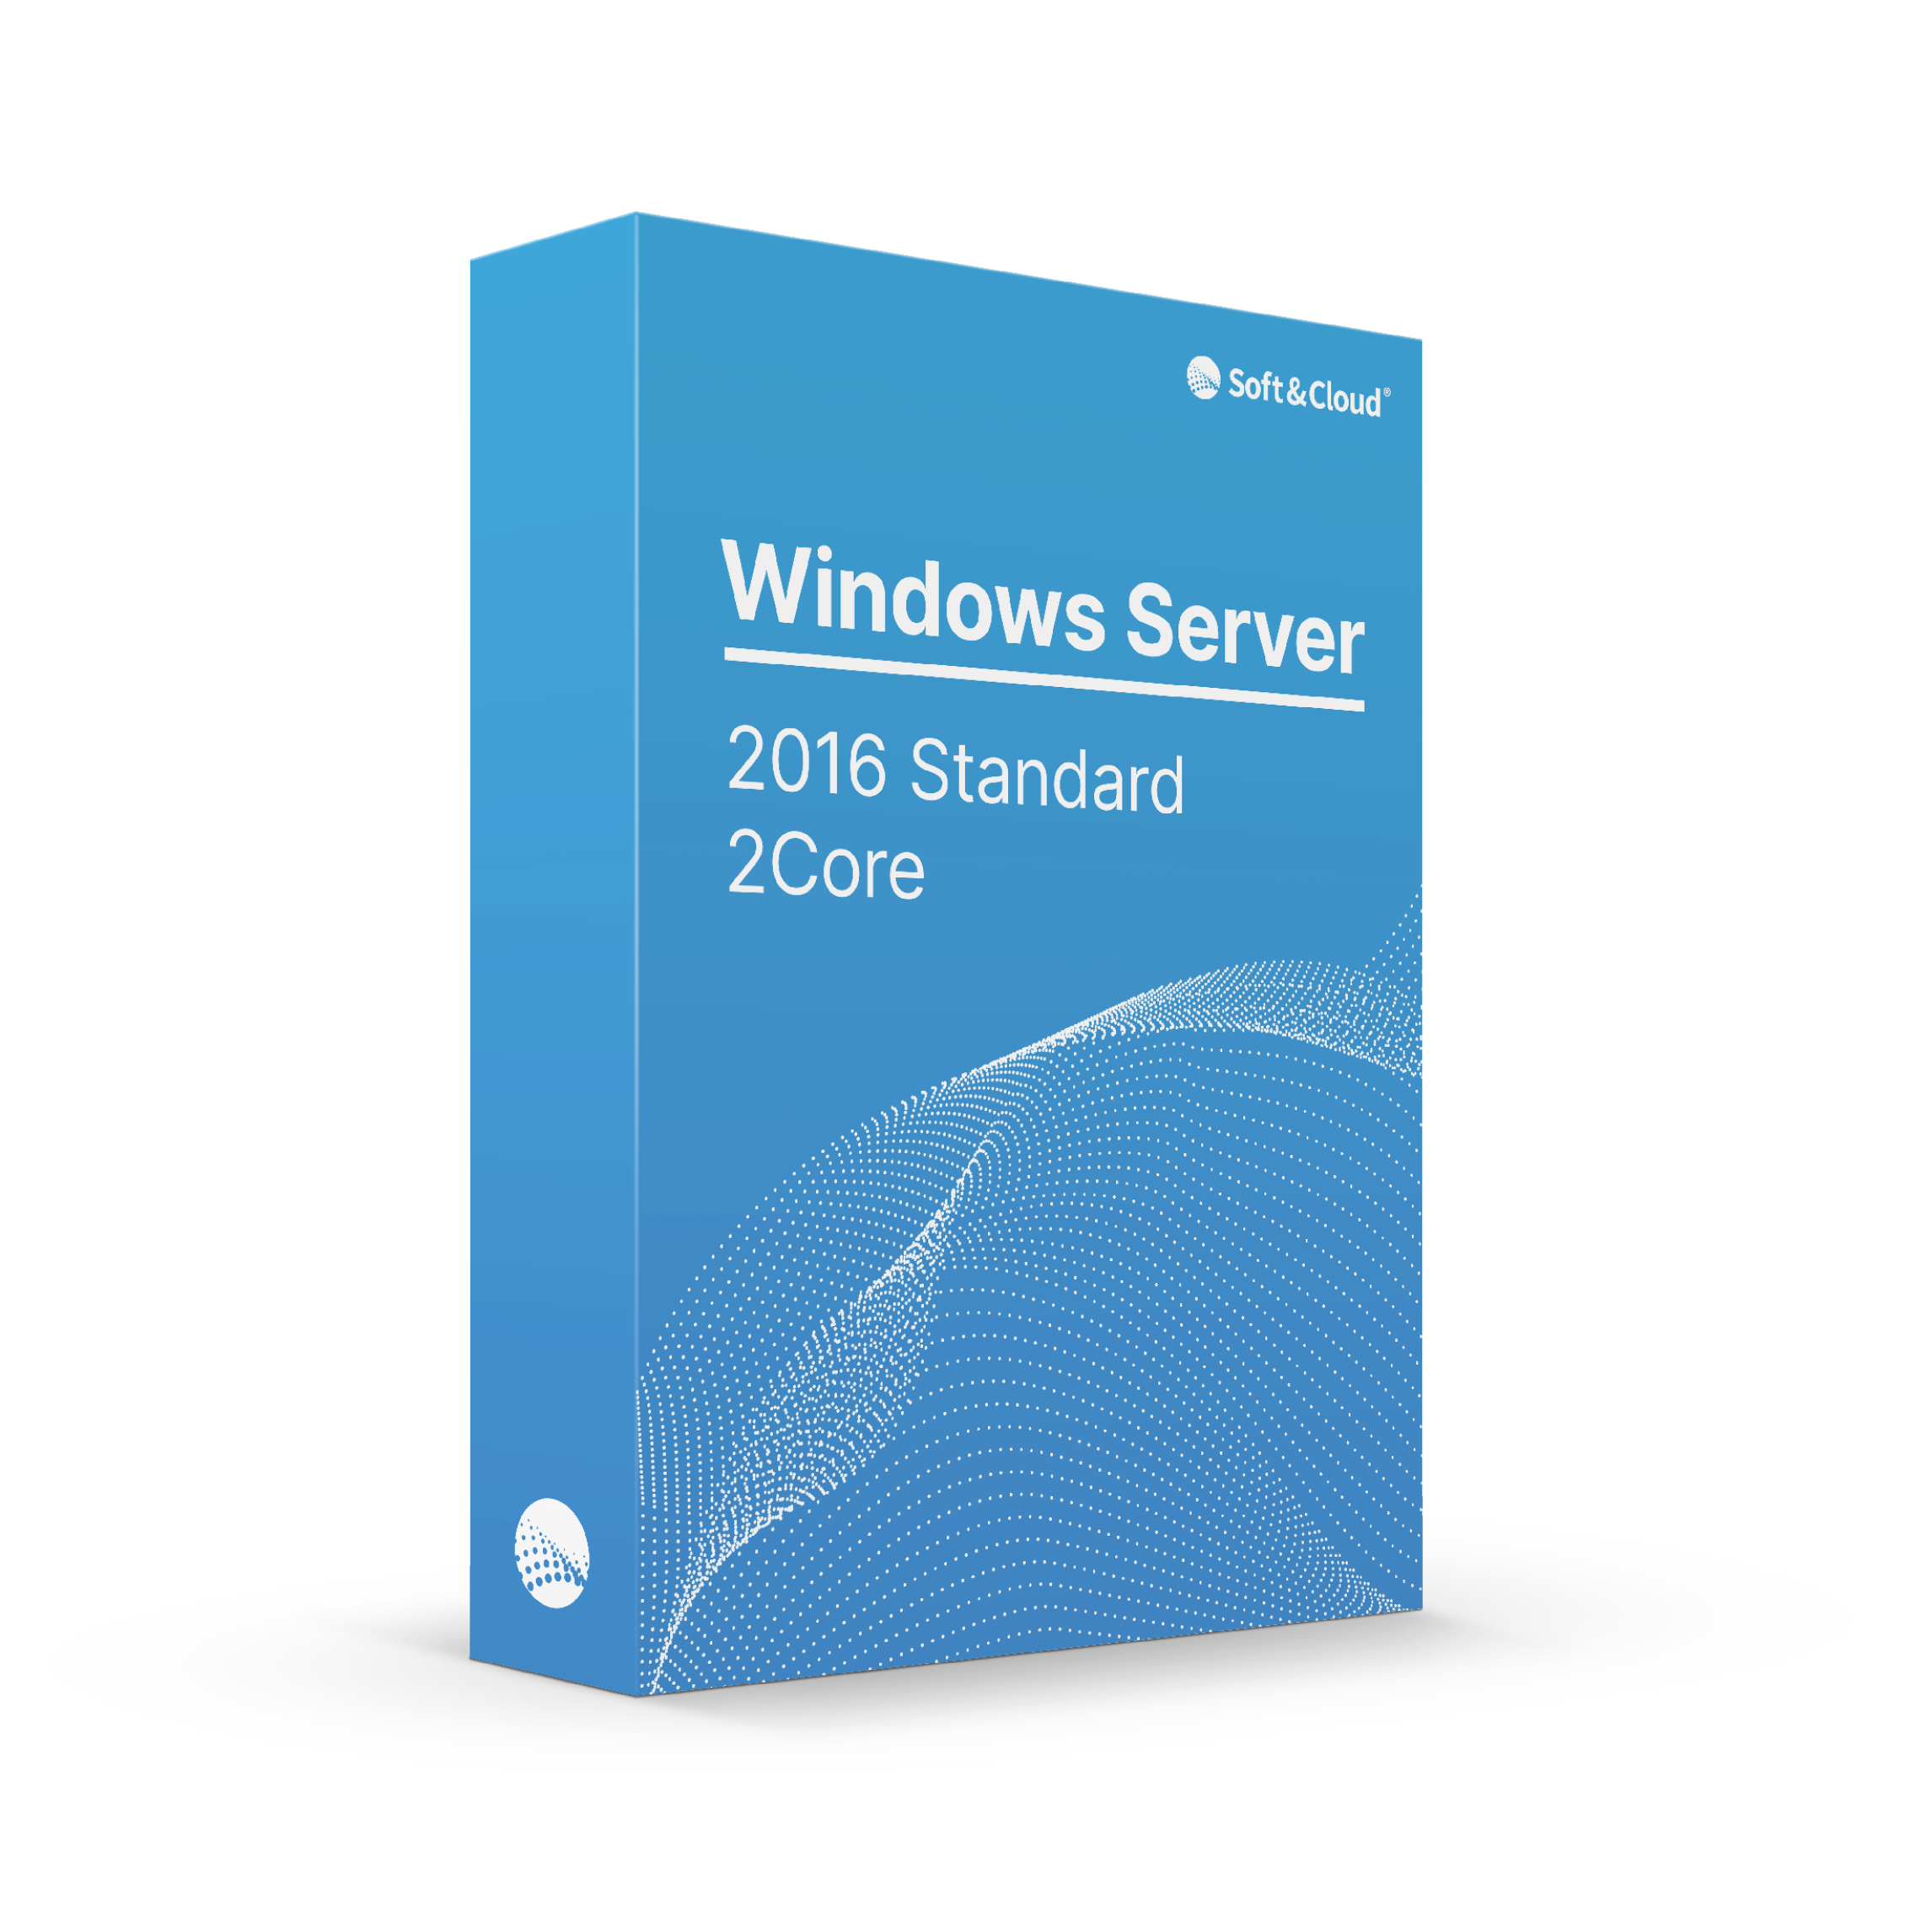 Windows Server 2016 Standard 2Core 